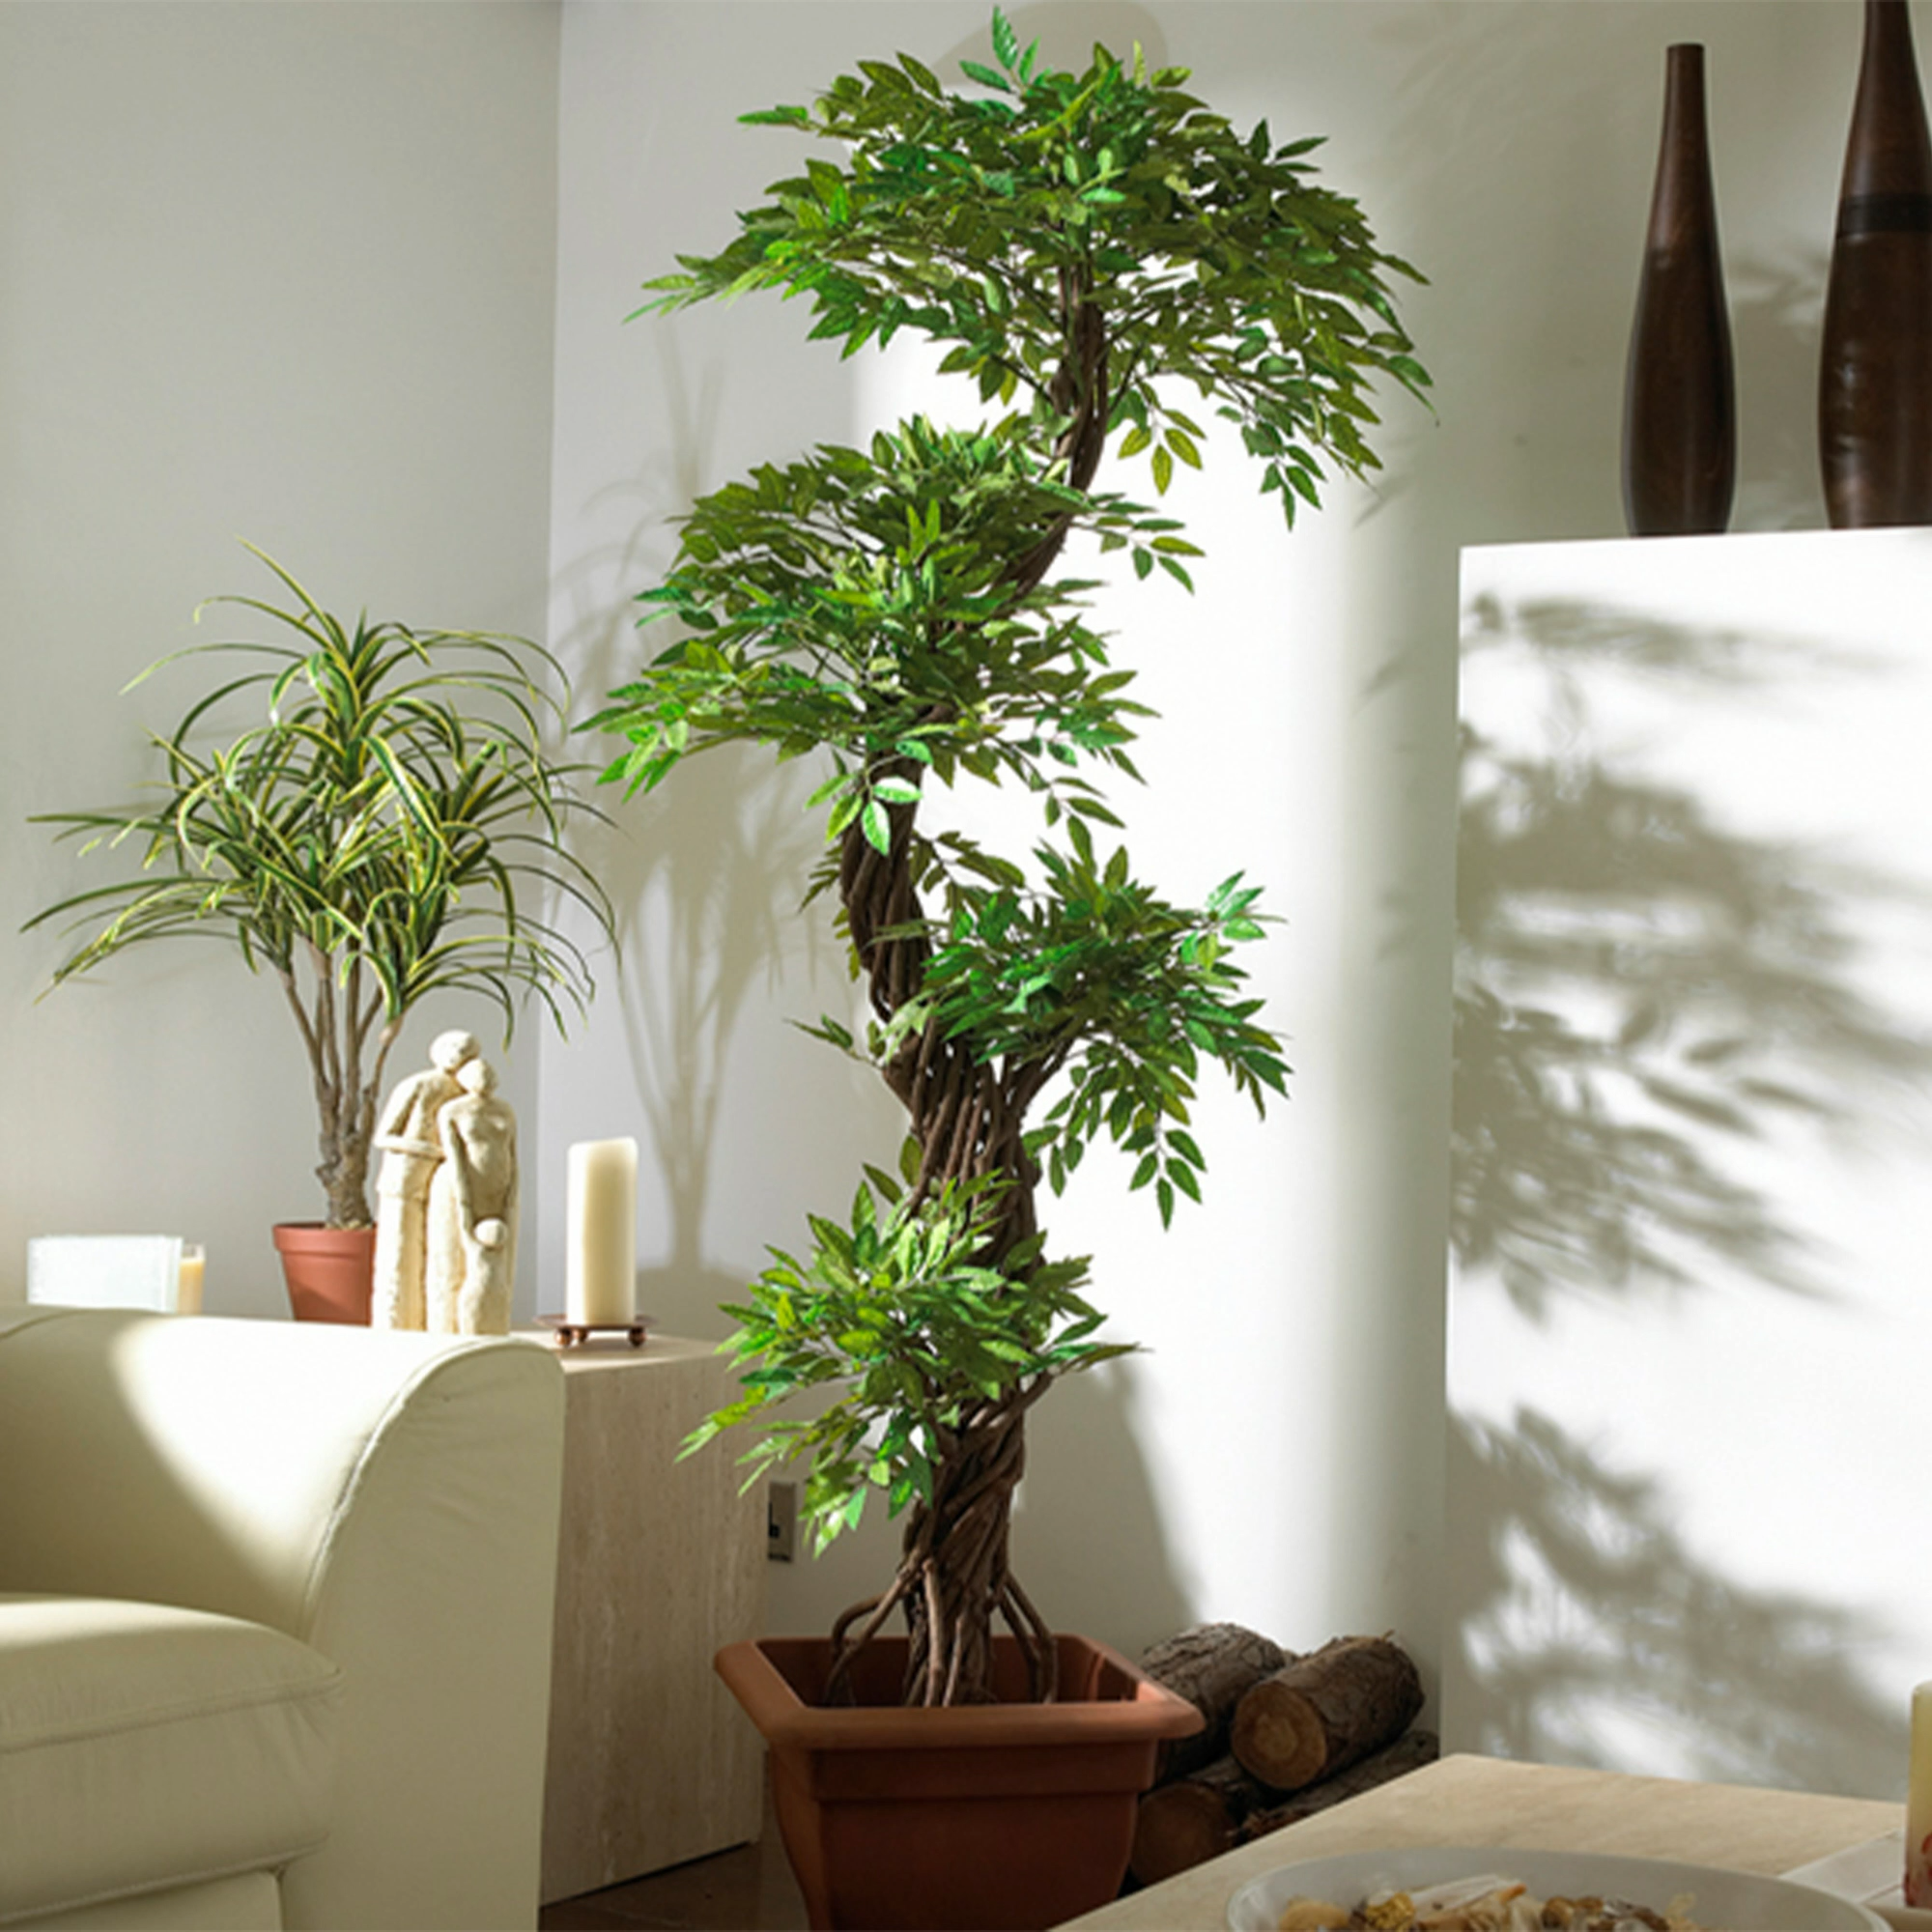 Explore the world of artificial plants - Vogue Plants -   17 planting Interior indoor ideas